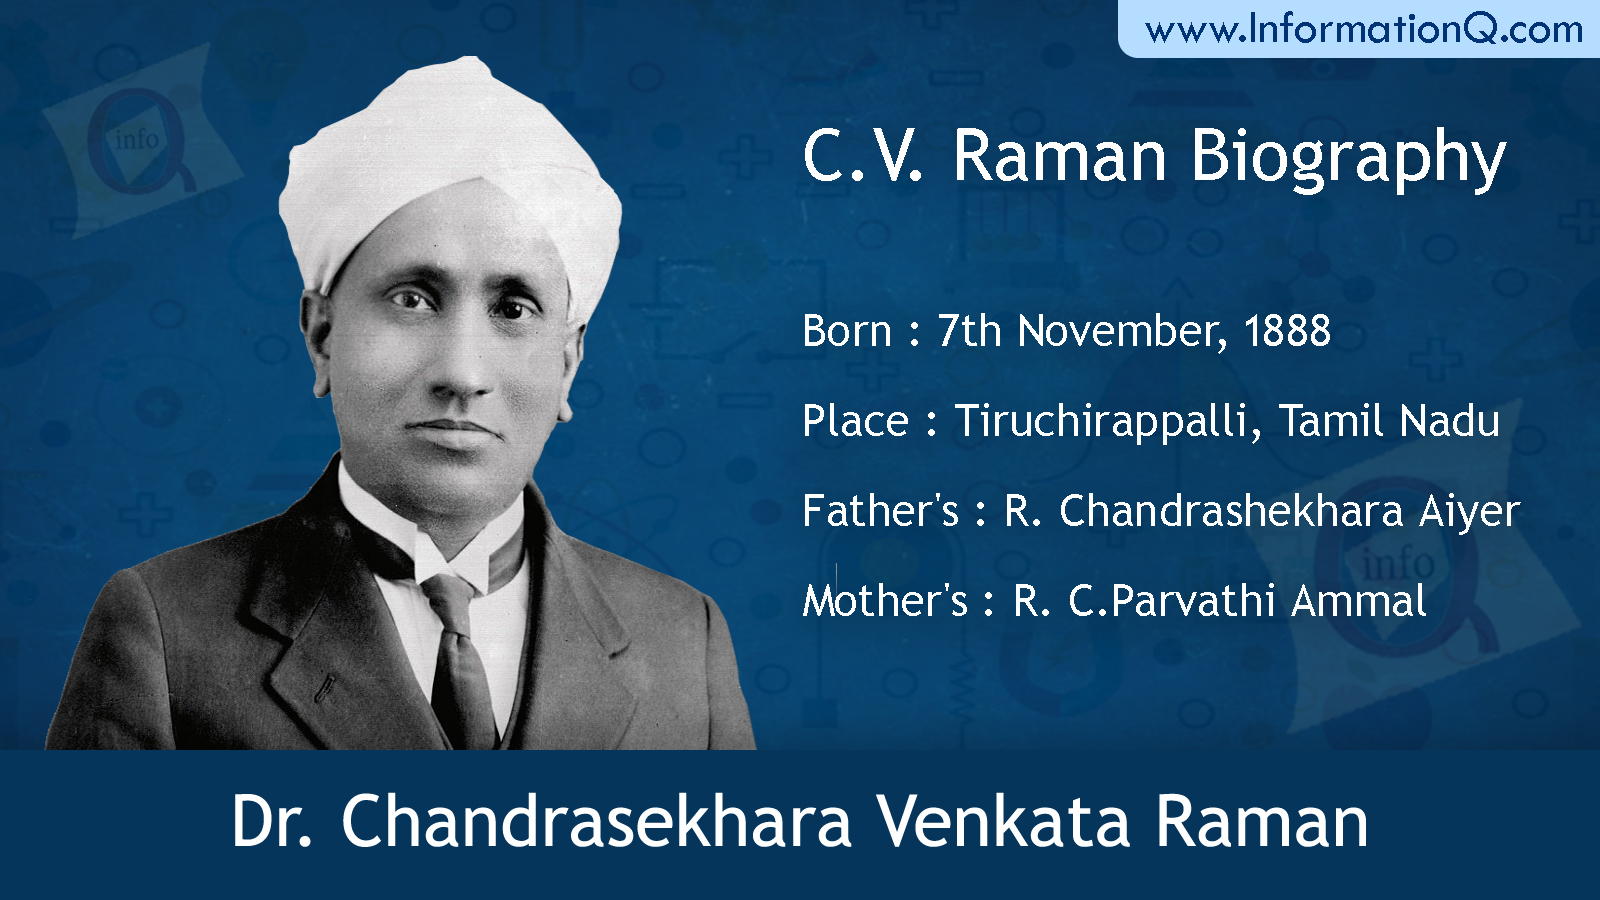 C.V. Raman Biography